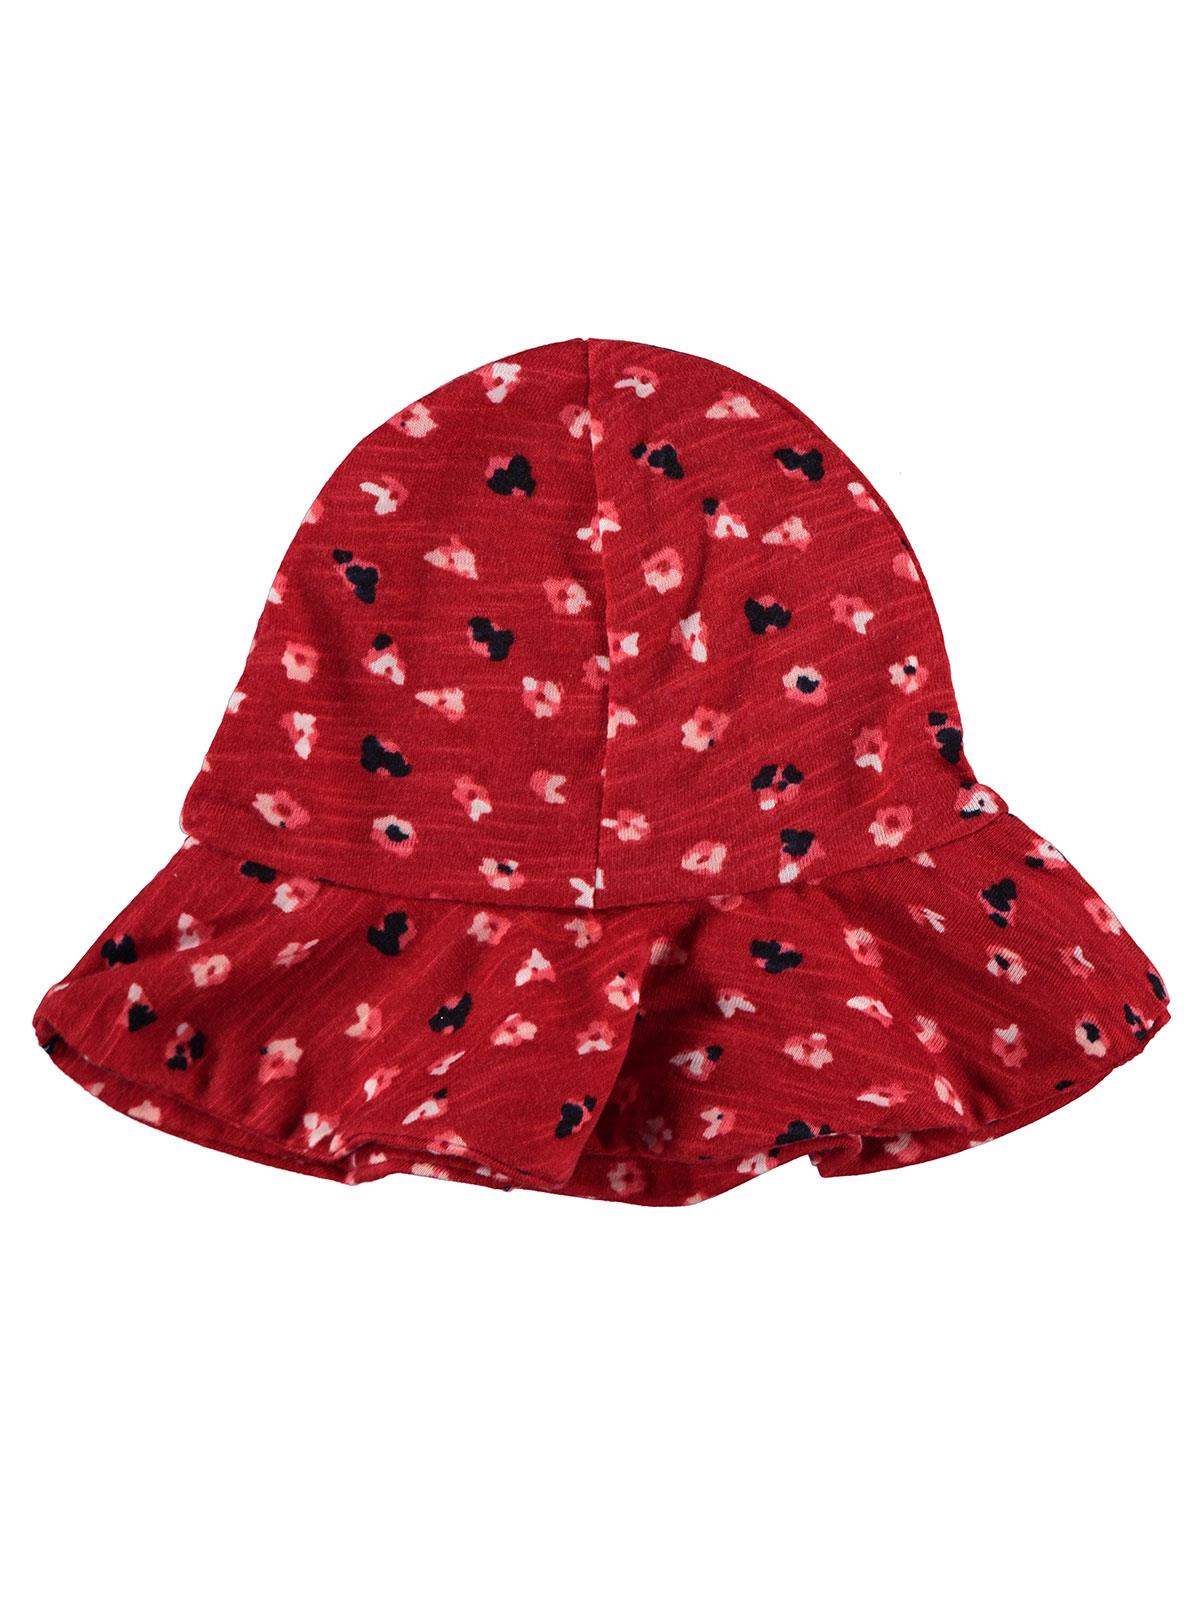 Albimama Kız Bebek Şapka 0-6 Ay Kırmızı